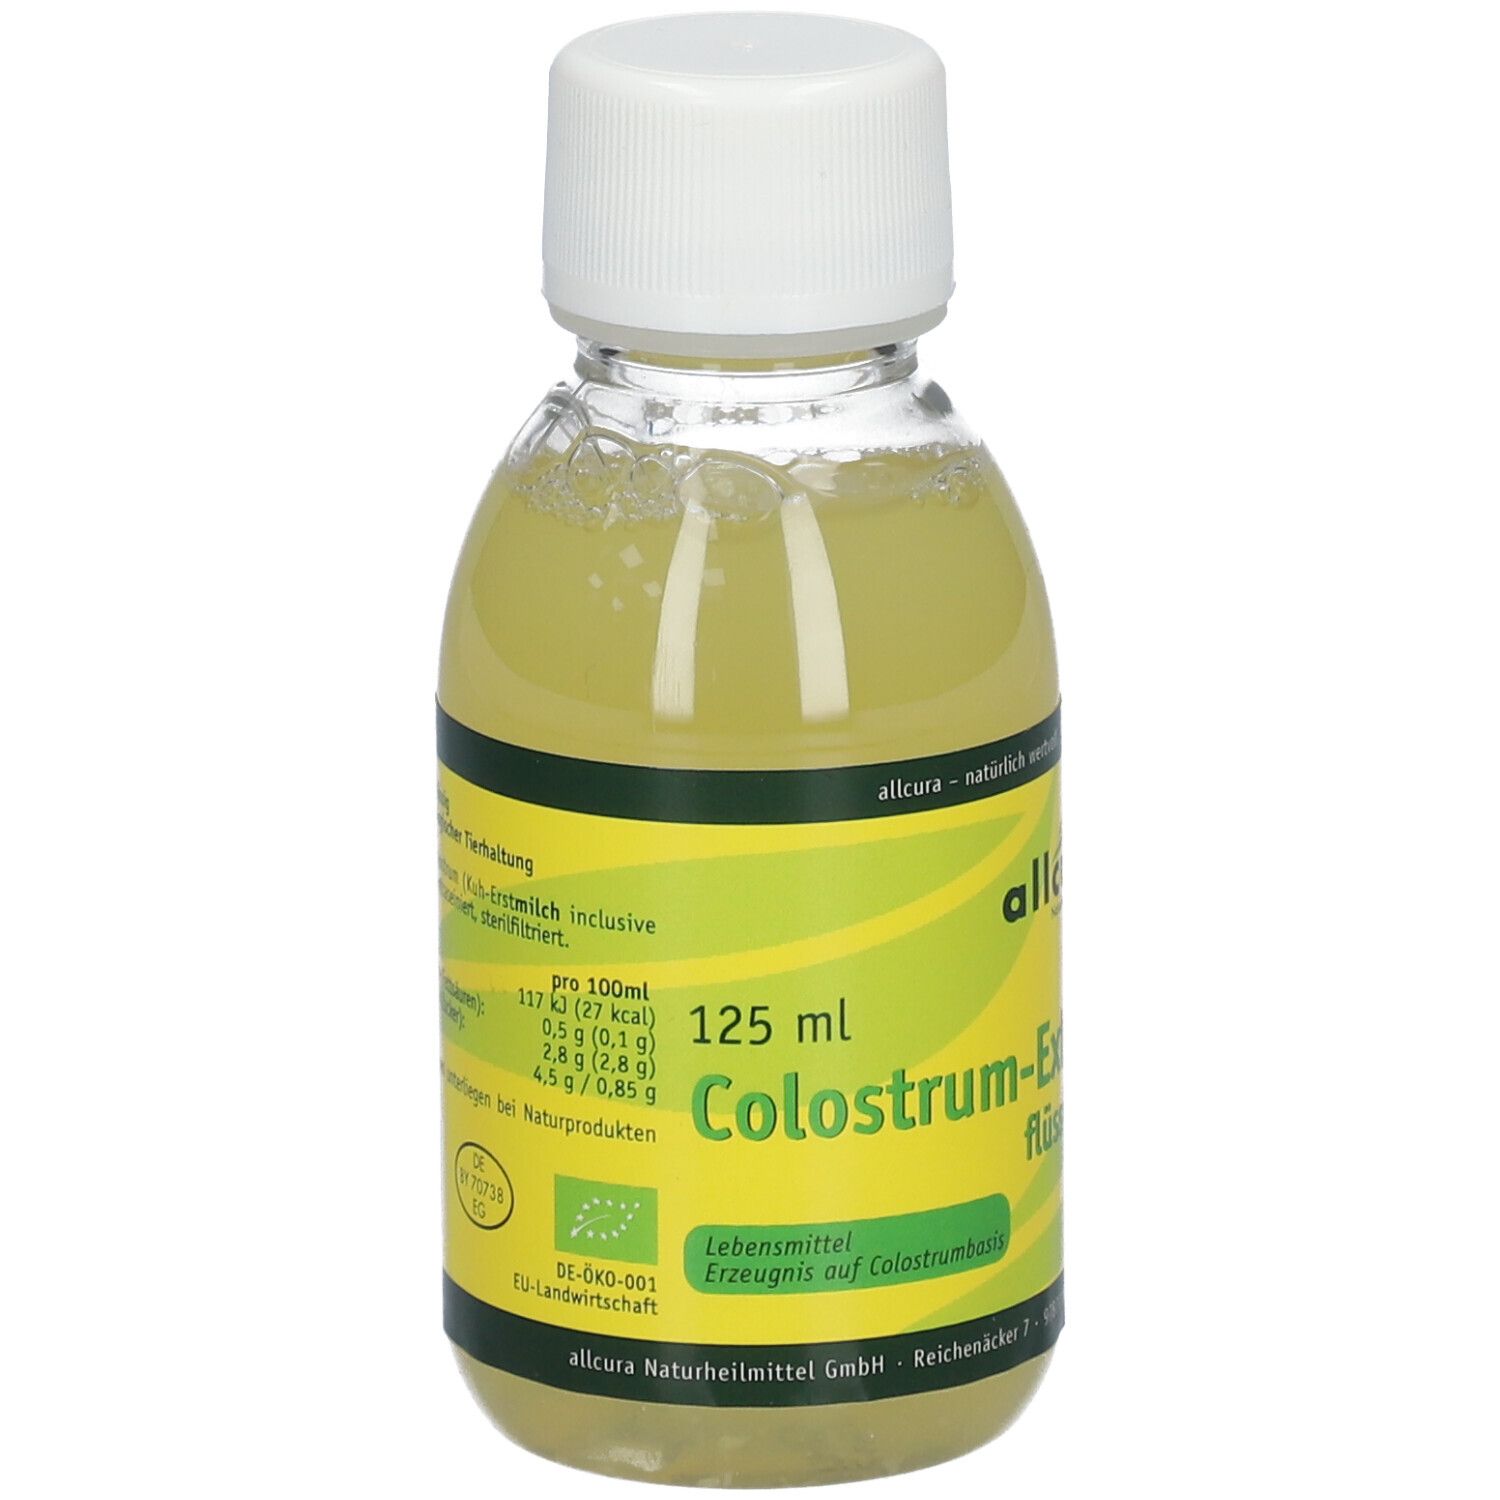 allcura Colostrum-Extract liquide